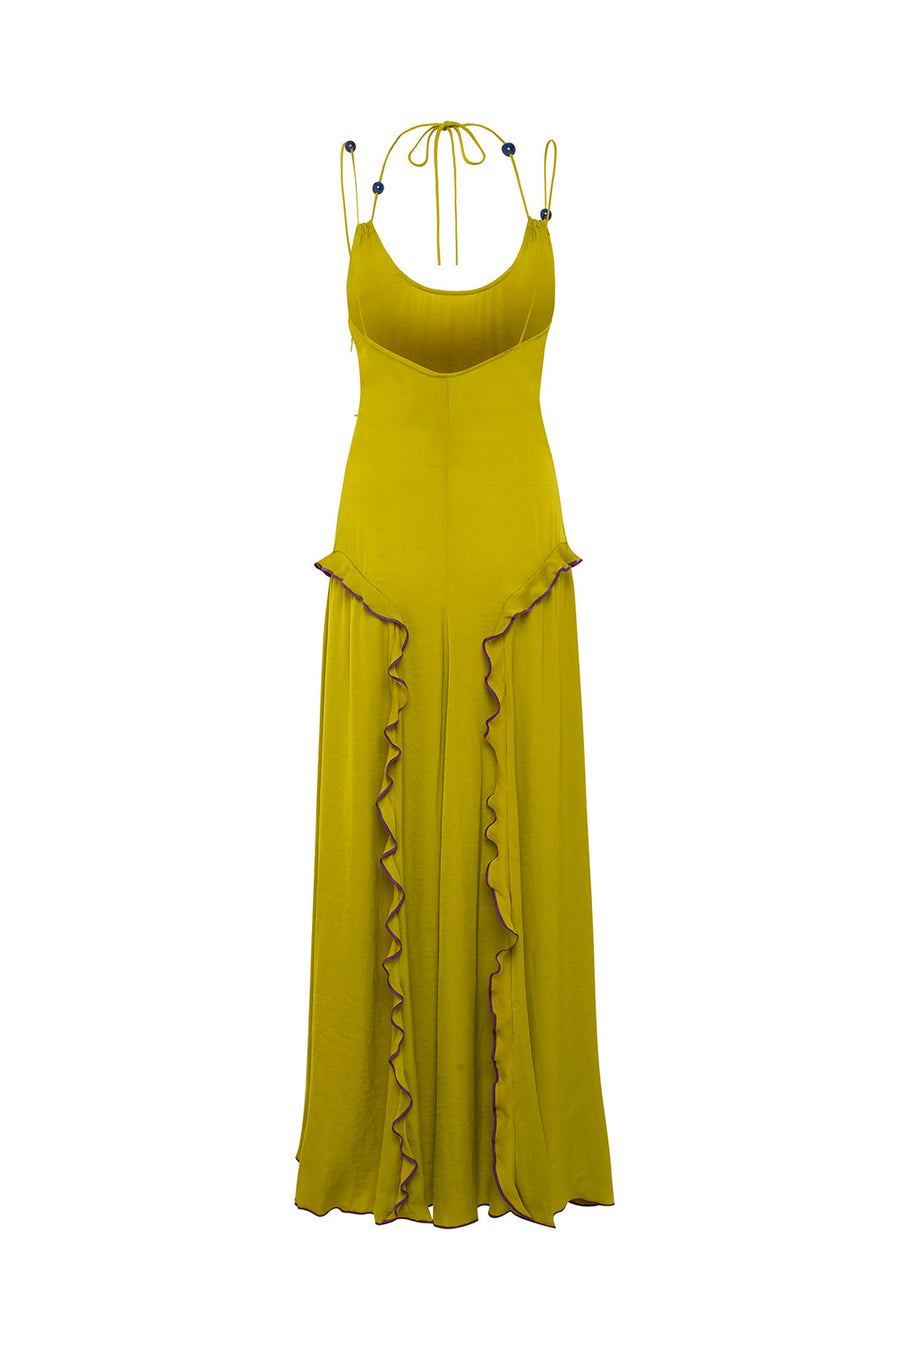 VIOLA - Flowy maxi dress with frills